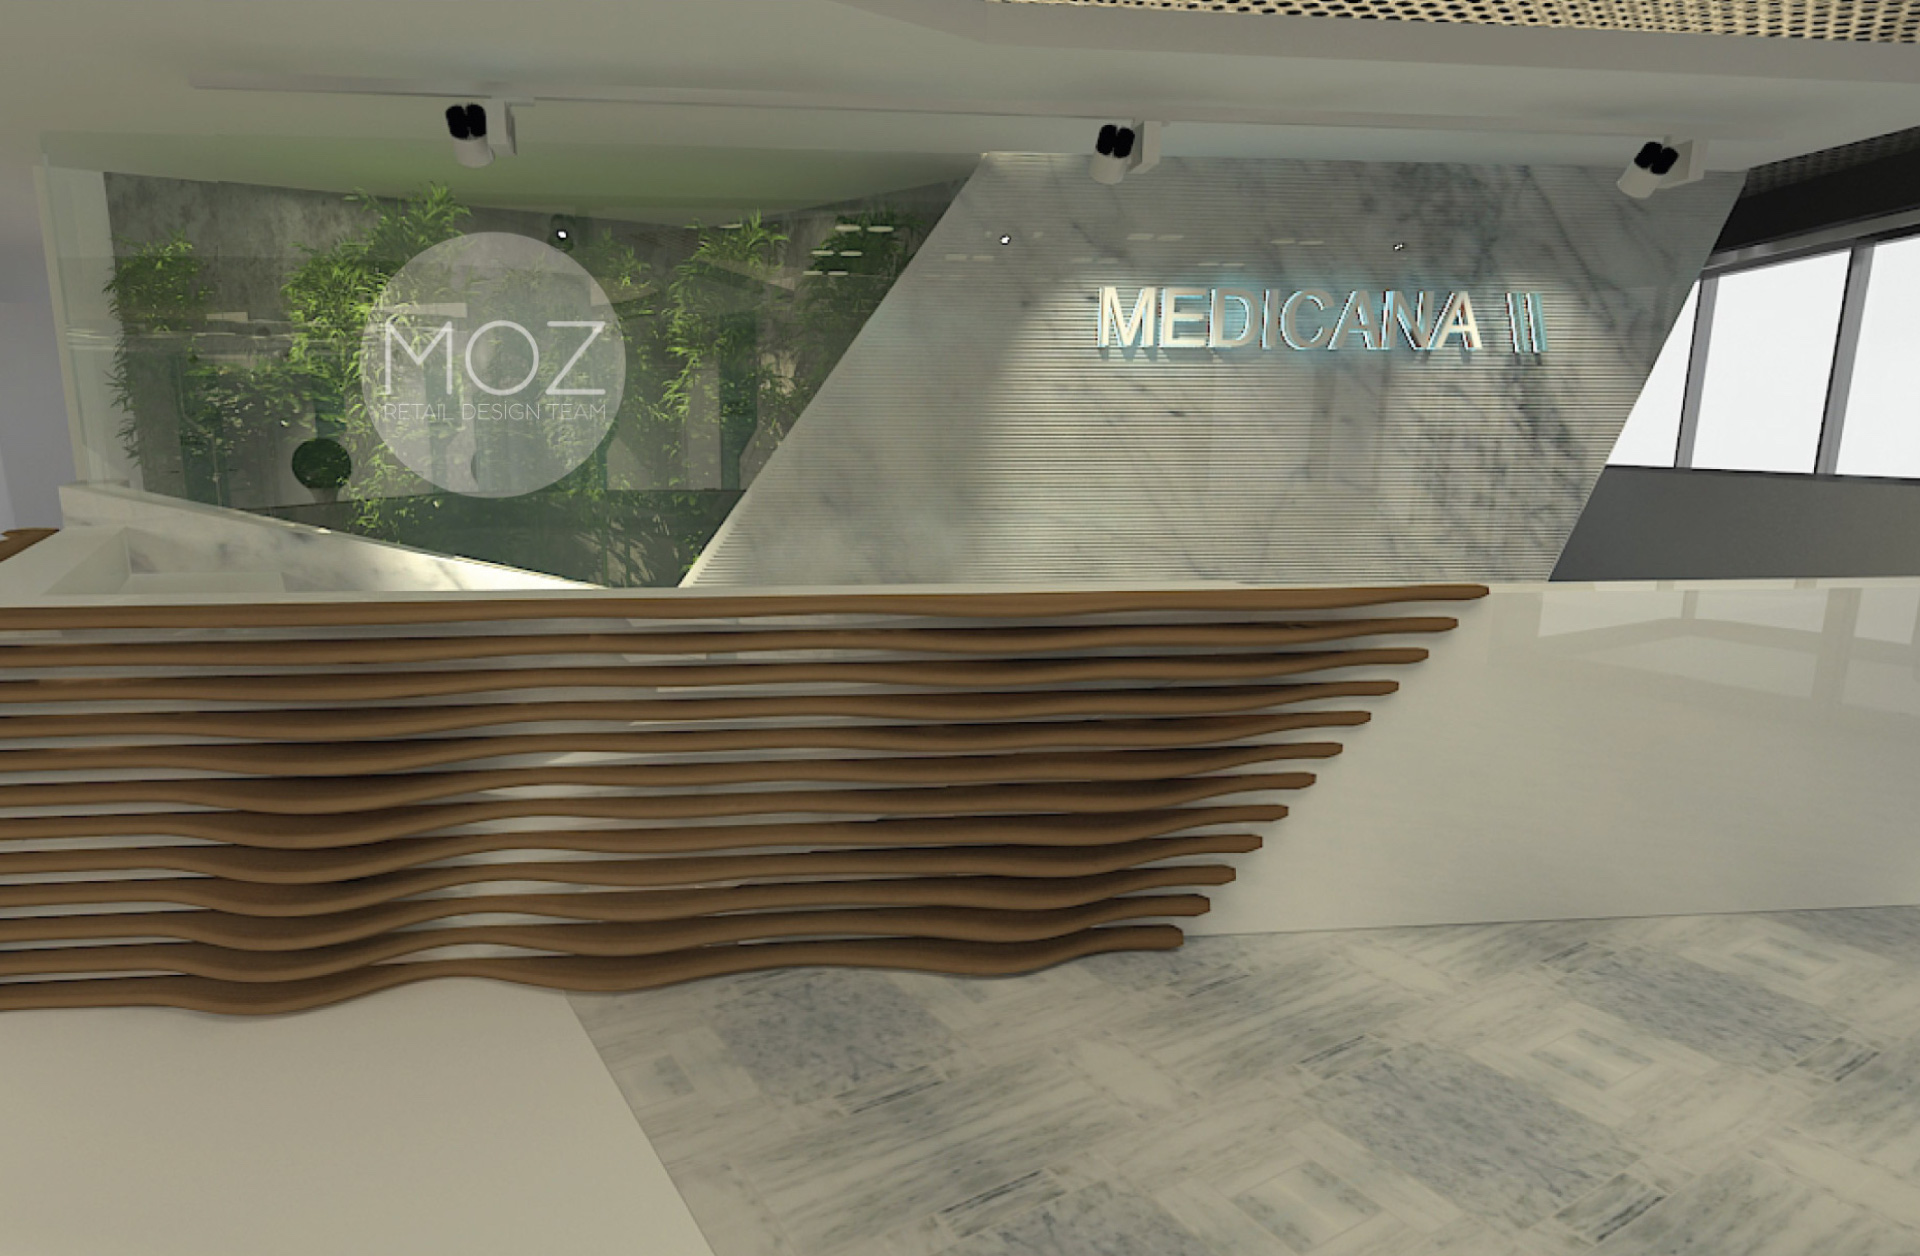 MOZ Retail Design Team |  Interior Architecture Firm